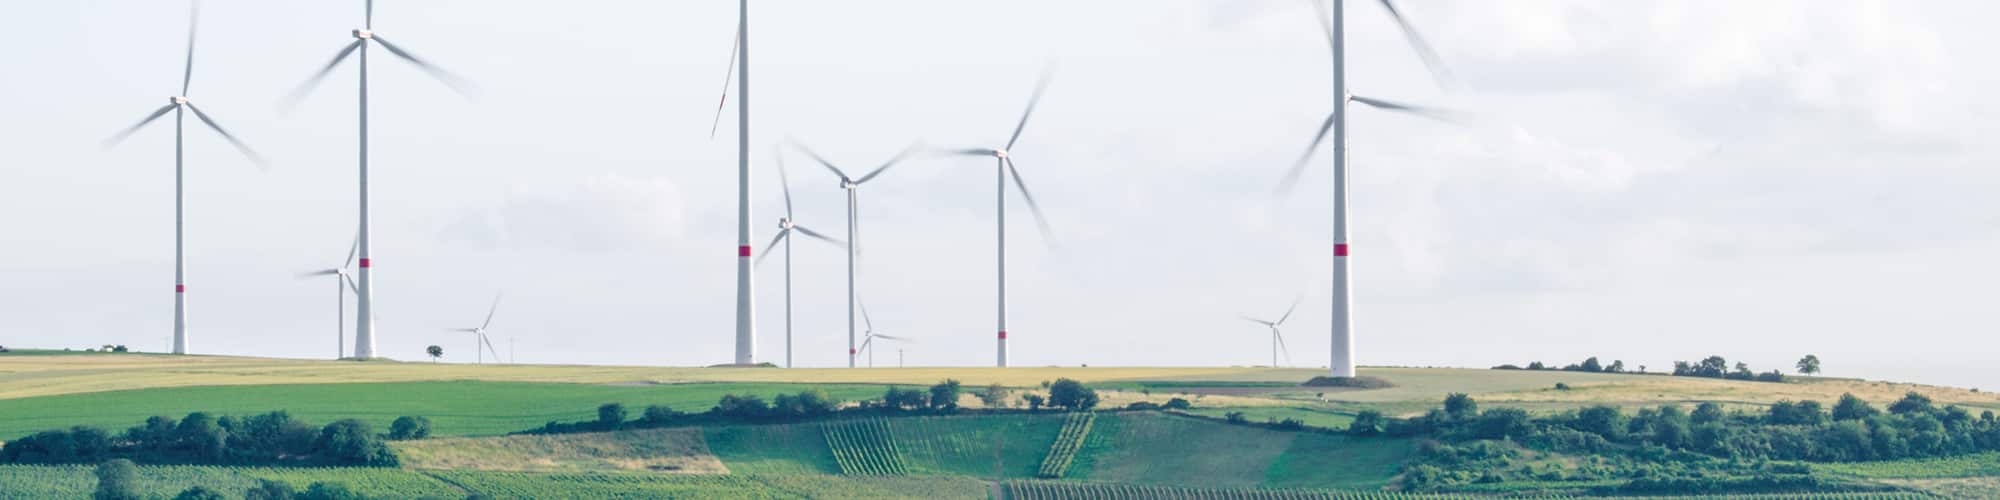 Wind driven electrical generators in a field